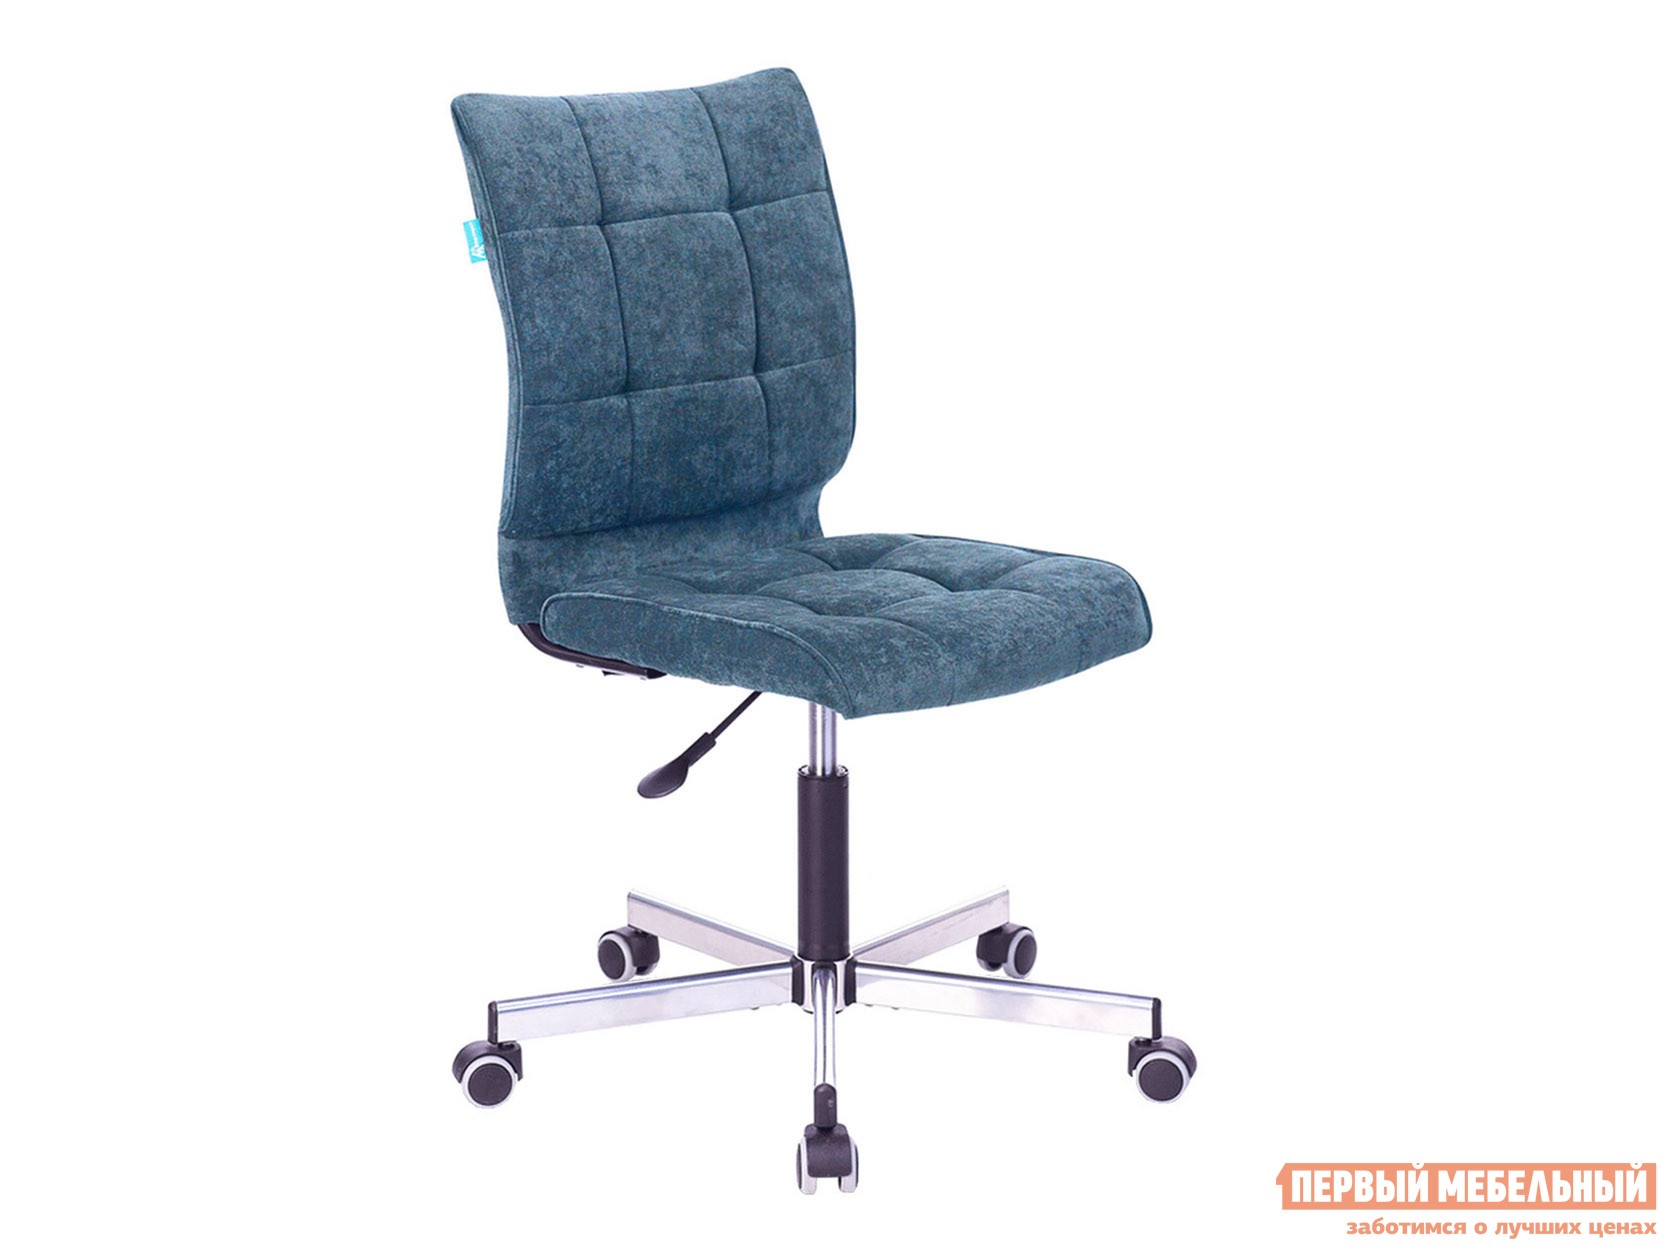 Офисное кресло ch-330m lt-27 темно-синий, велюр preview 1